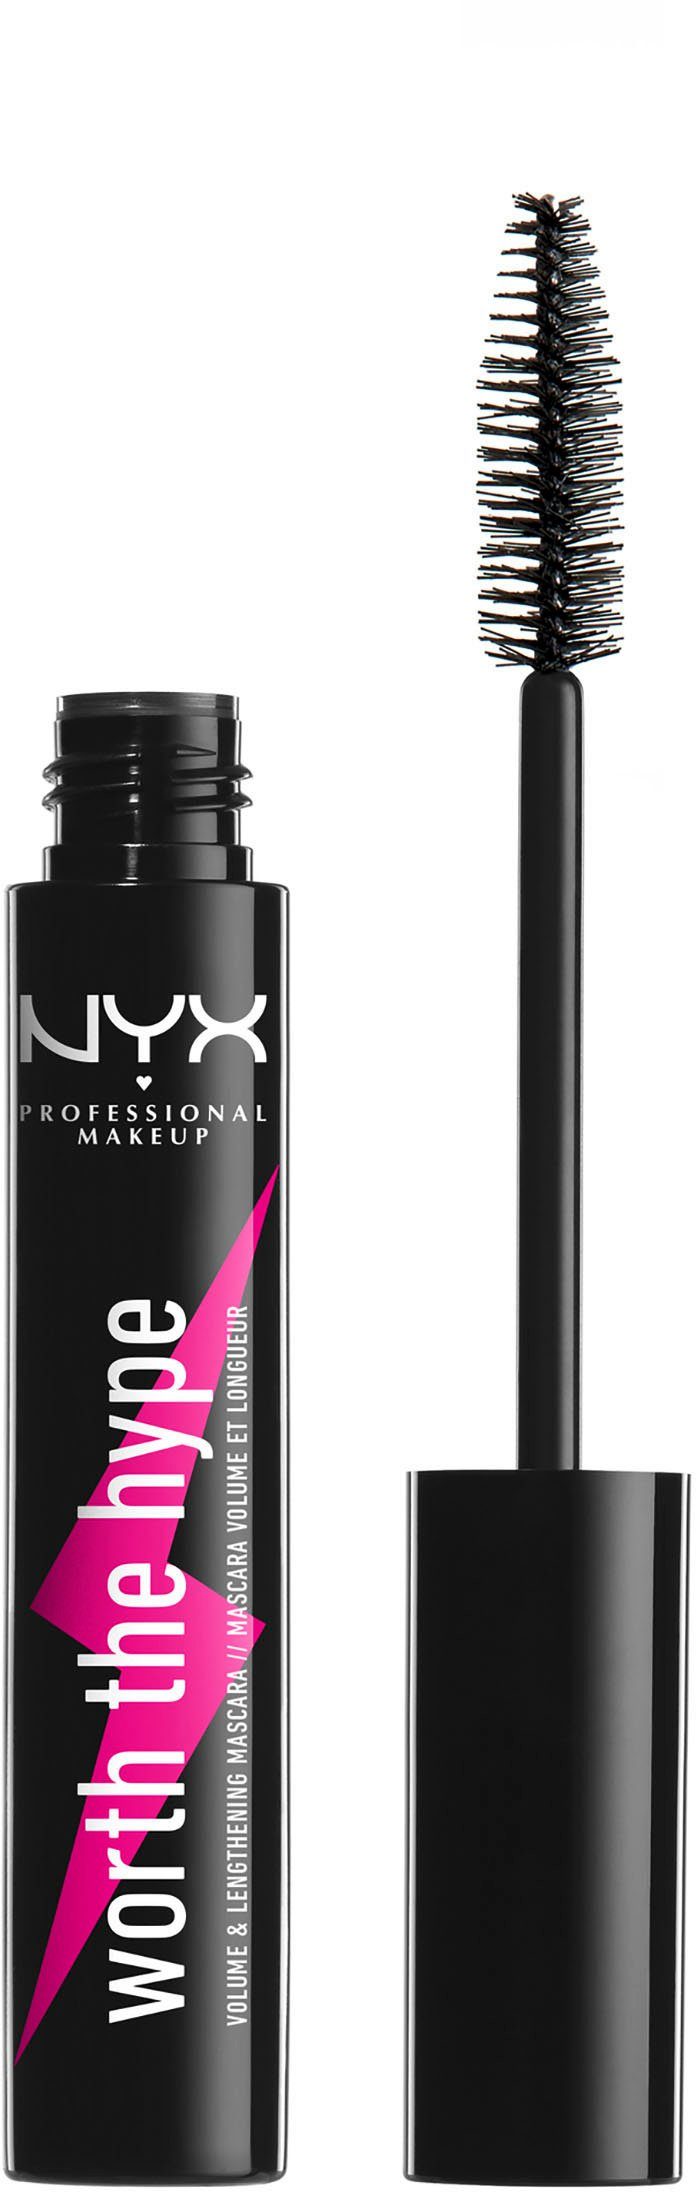 NYX Mascara Professional Makeup Worth The Hype Mascara | Mascara